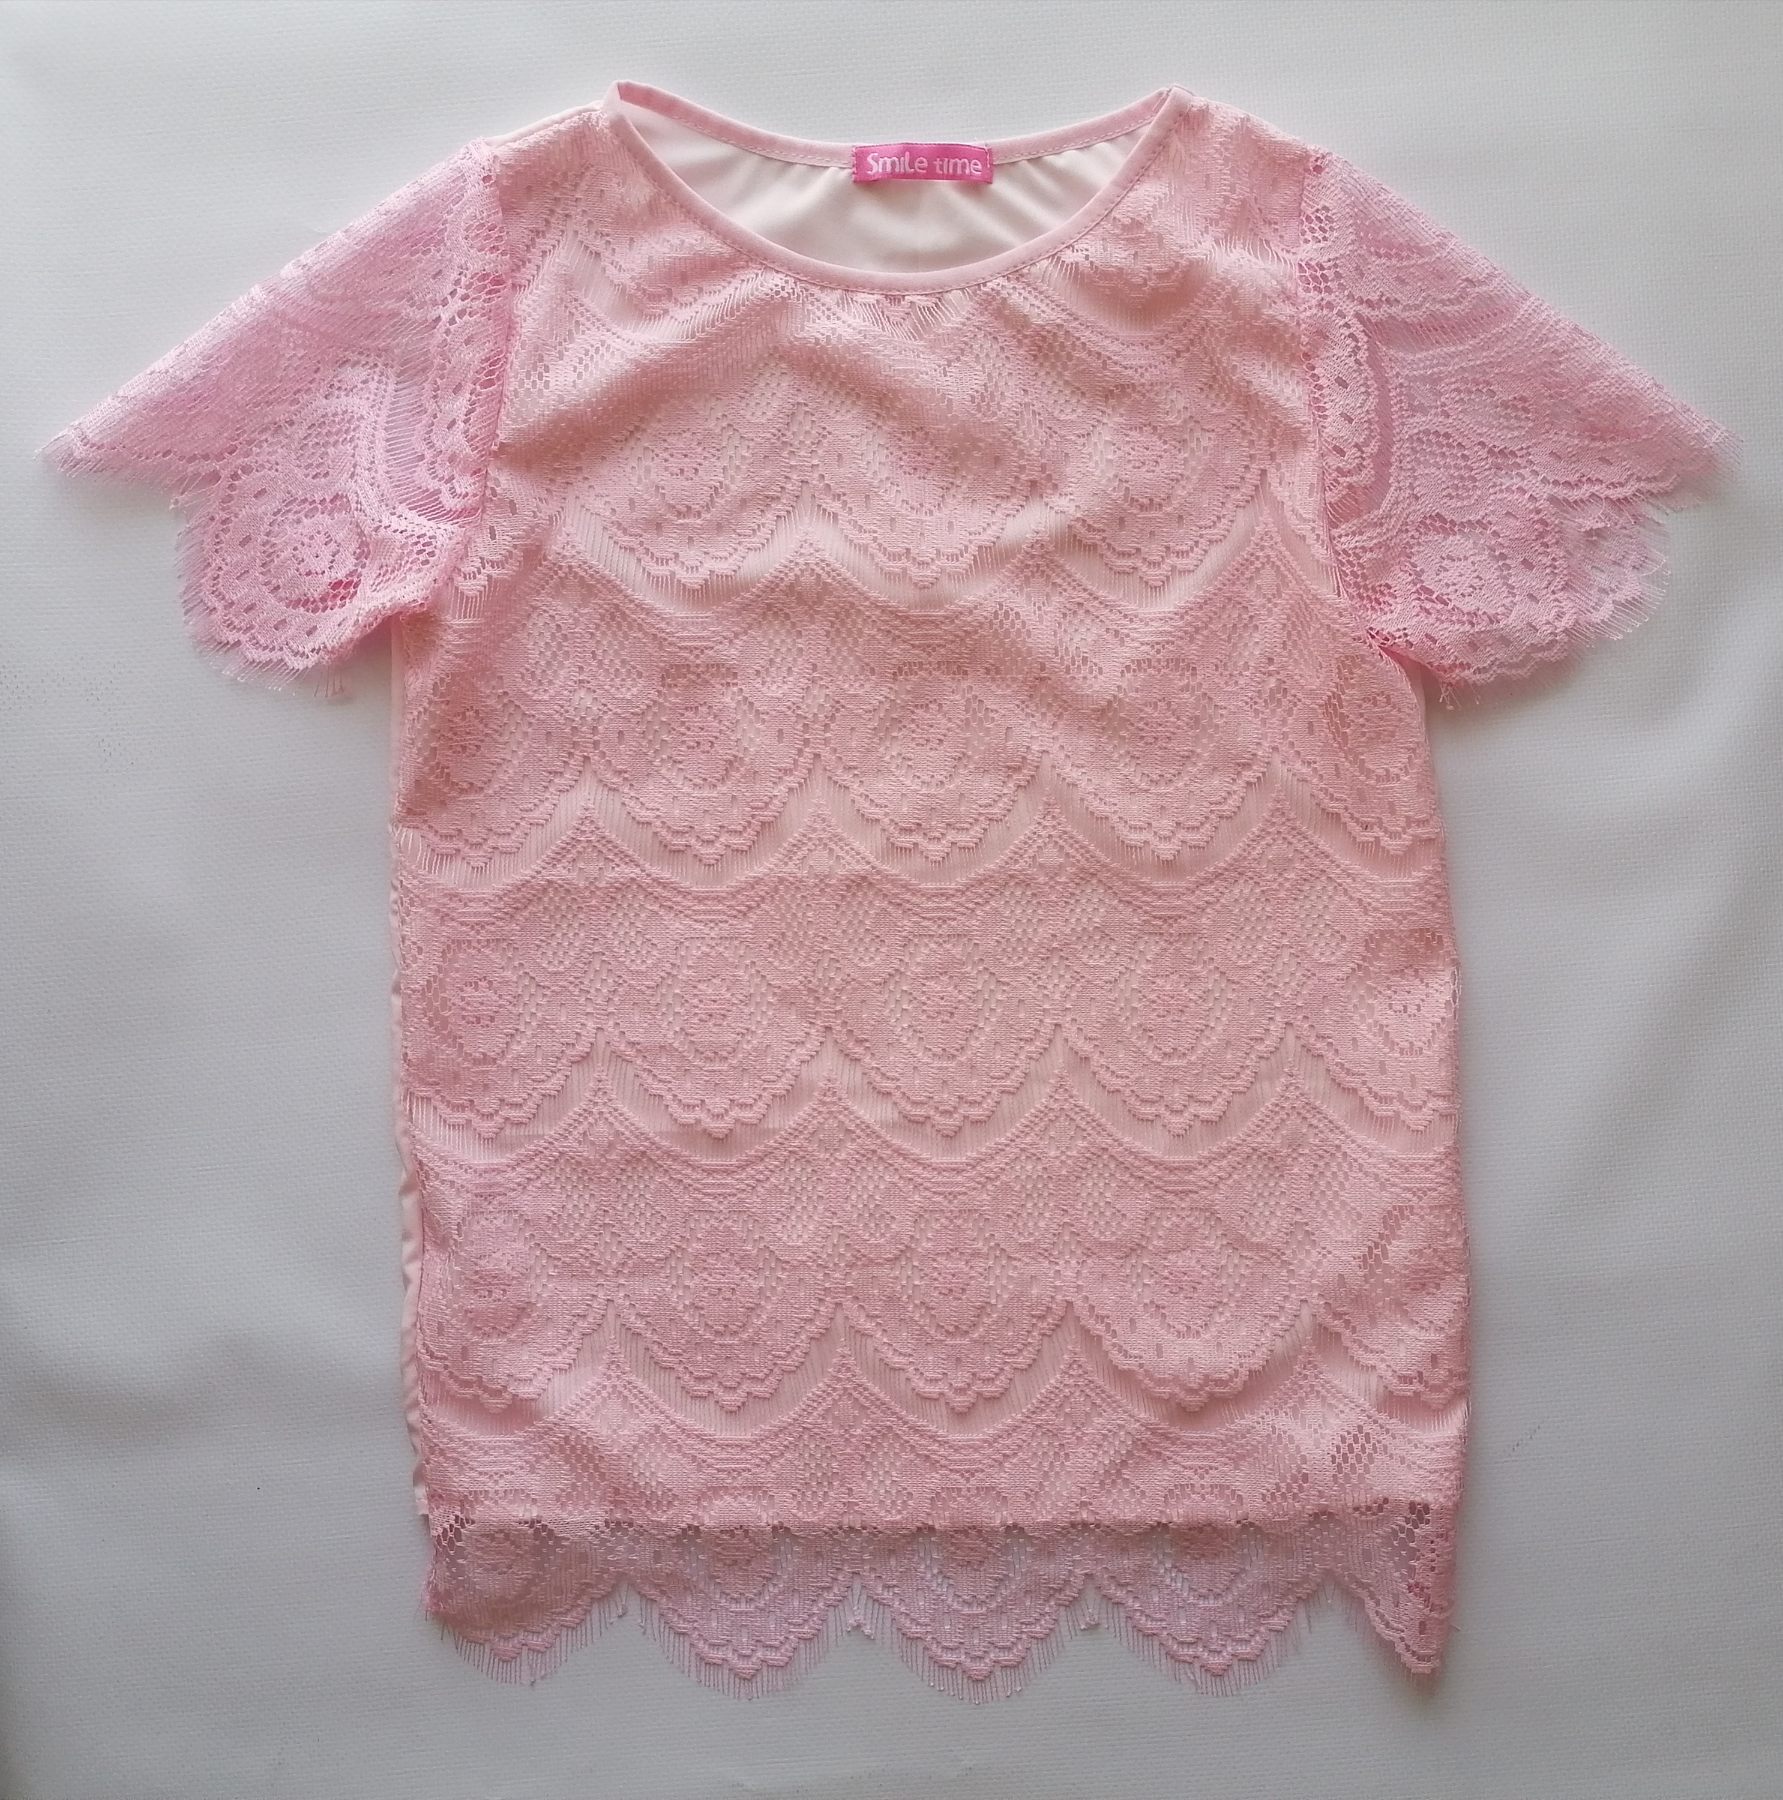 Блузка для девочки, короткий рукав, кружевная, розовая Eva SmileTime 